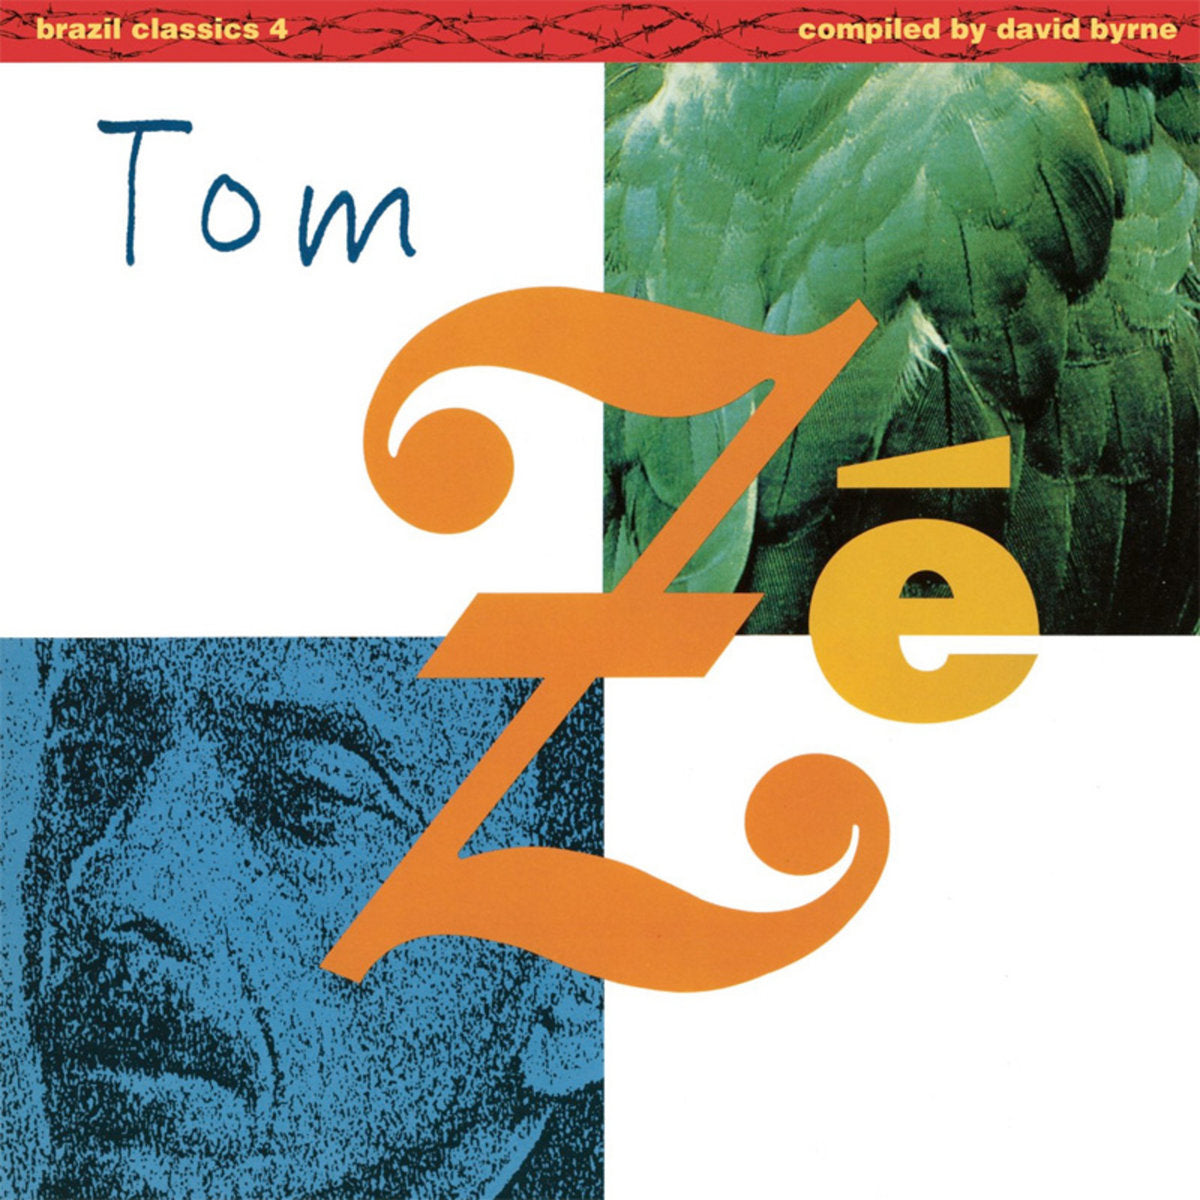 【LP】Tom Ze - Brazil Classics Vol. 4 (compiled by david byrne)